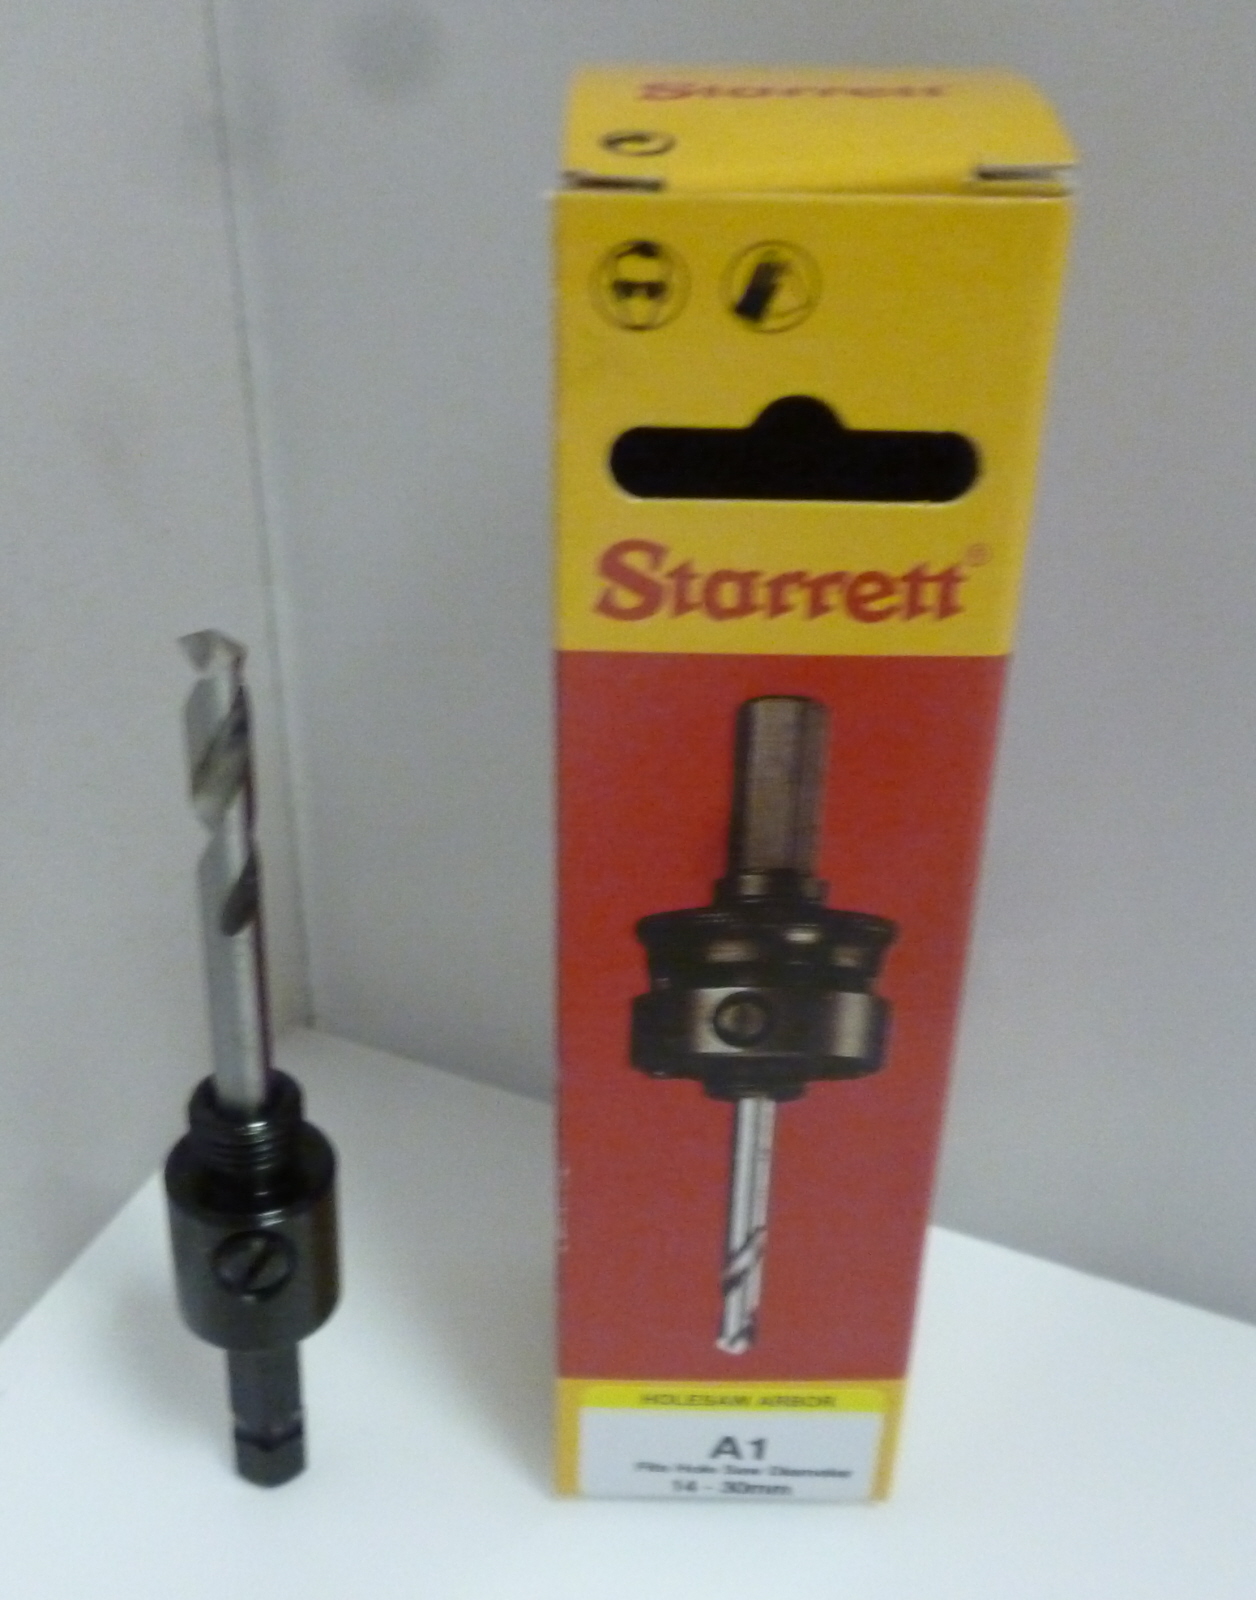 Starrett A1 Arbor to Suit 14mm-30mm Holesaws